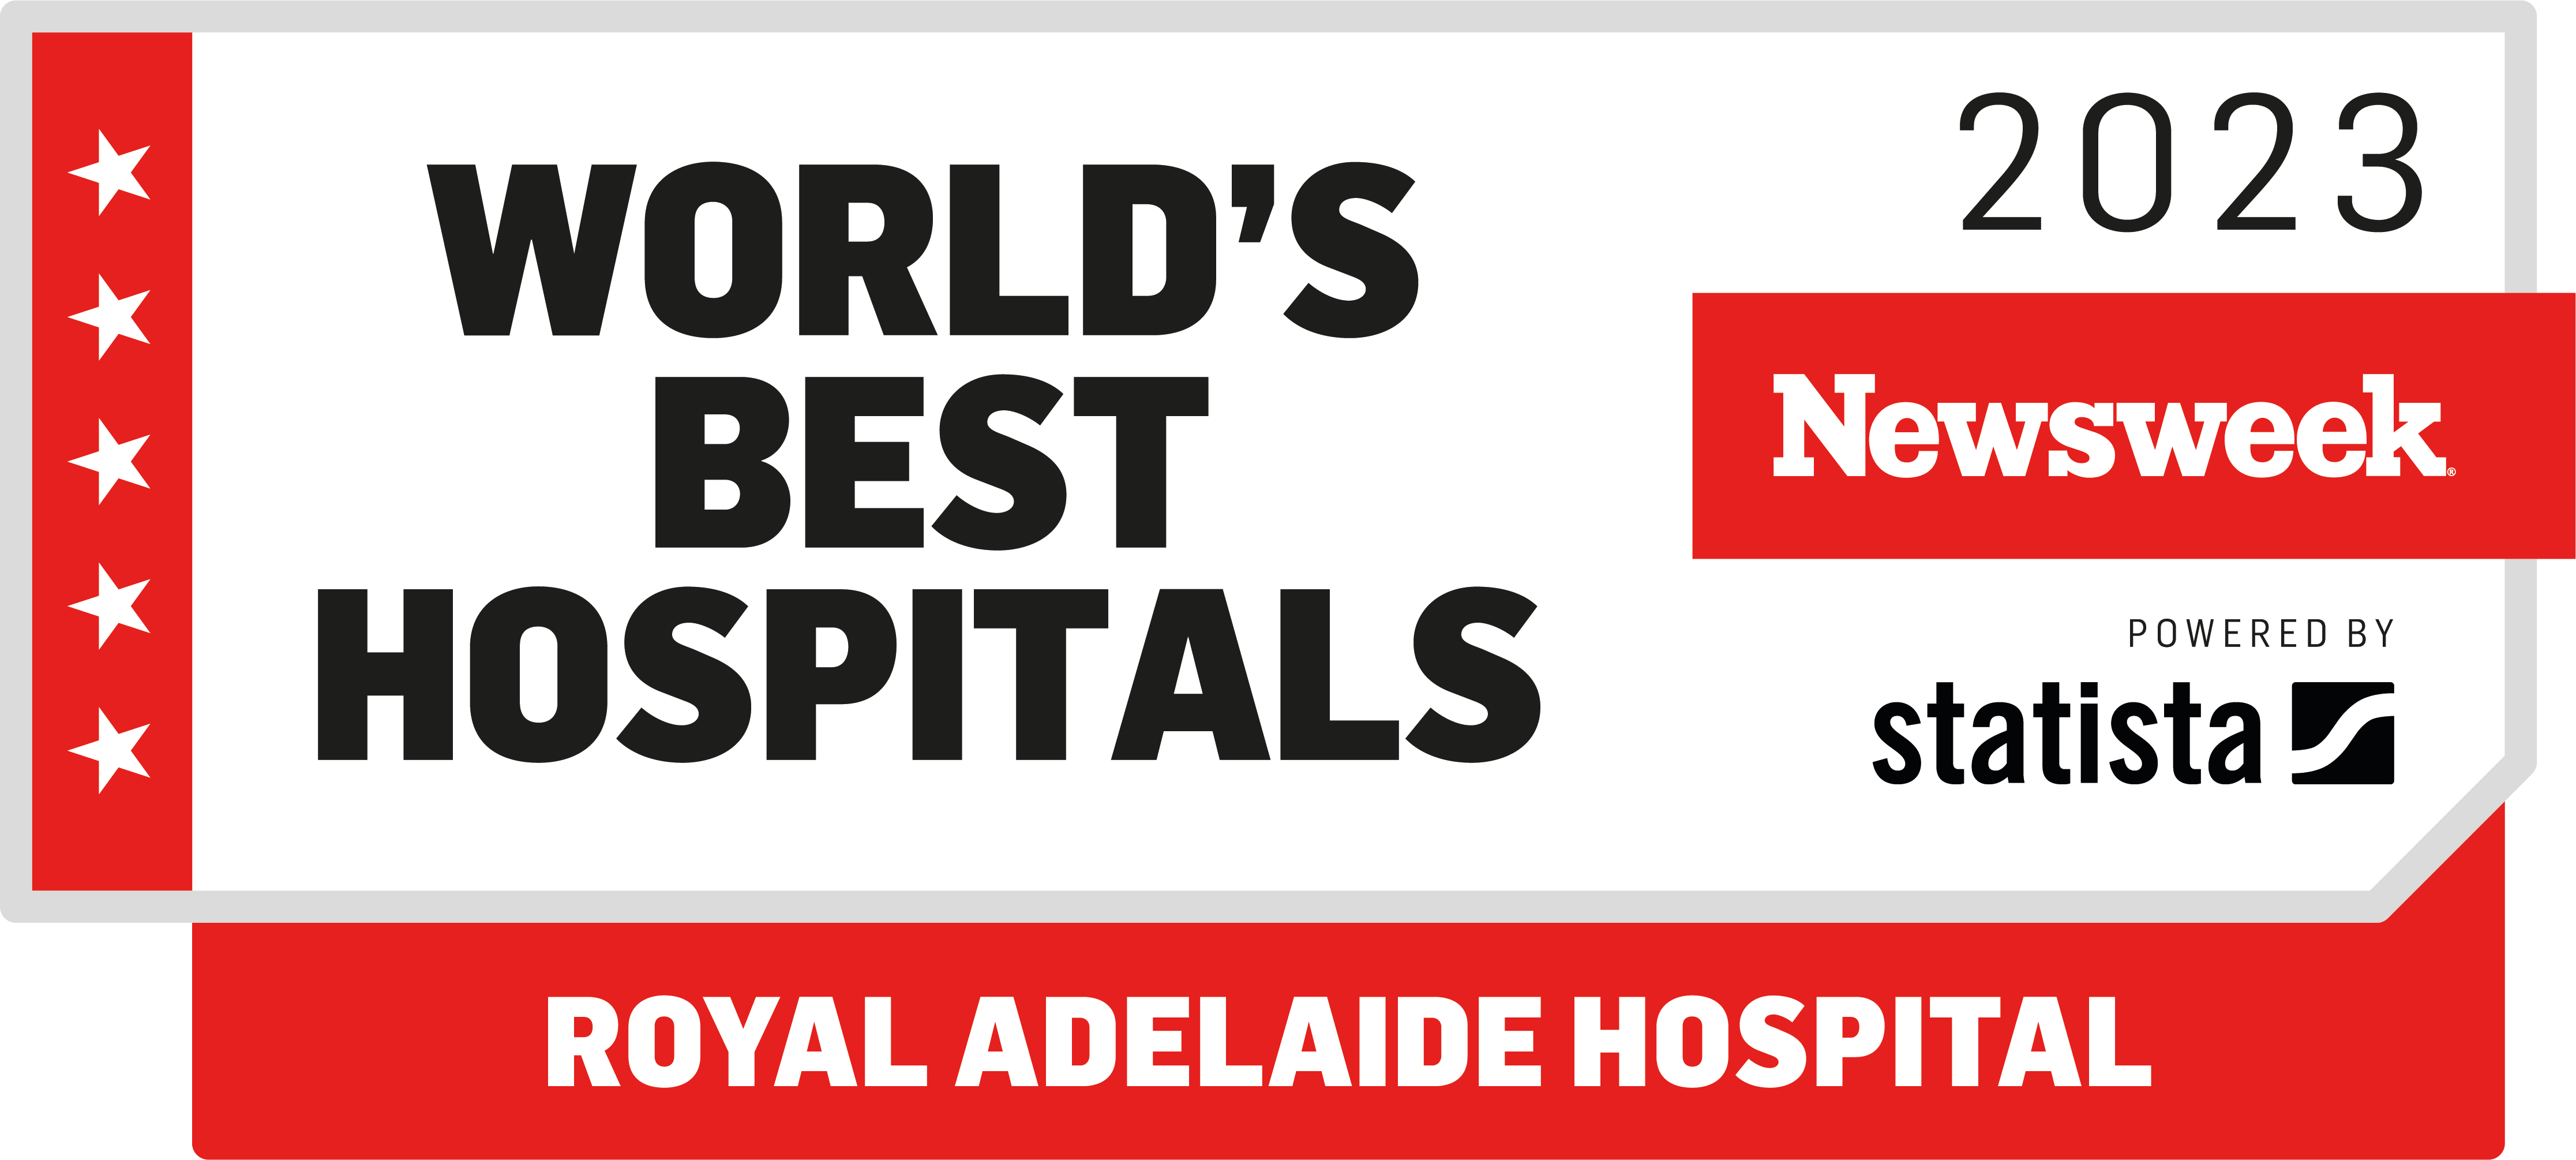 Newsweeks World's Best Hospitals 2022